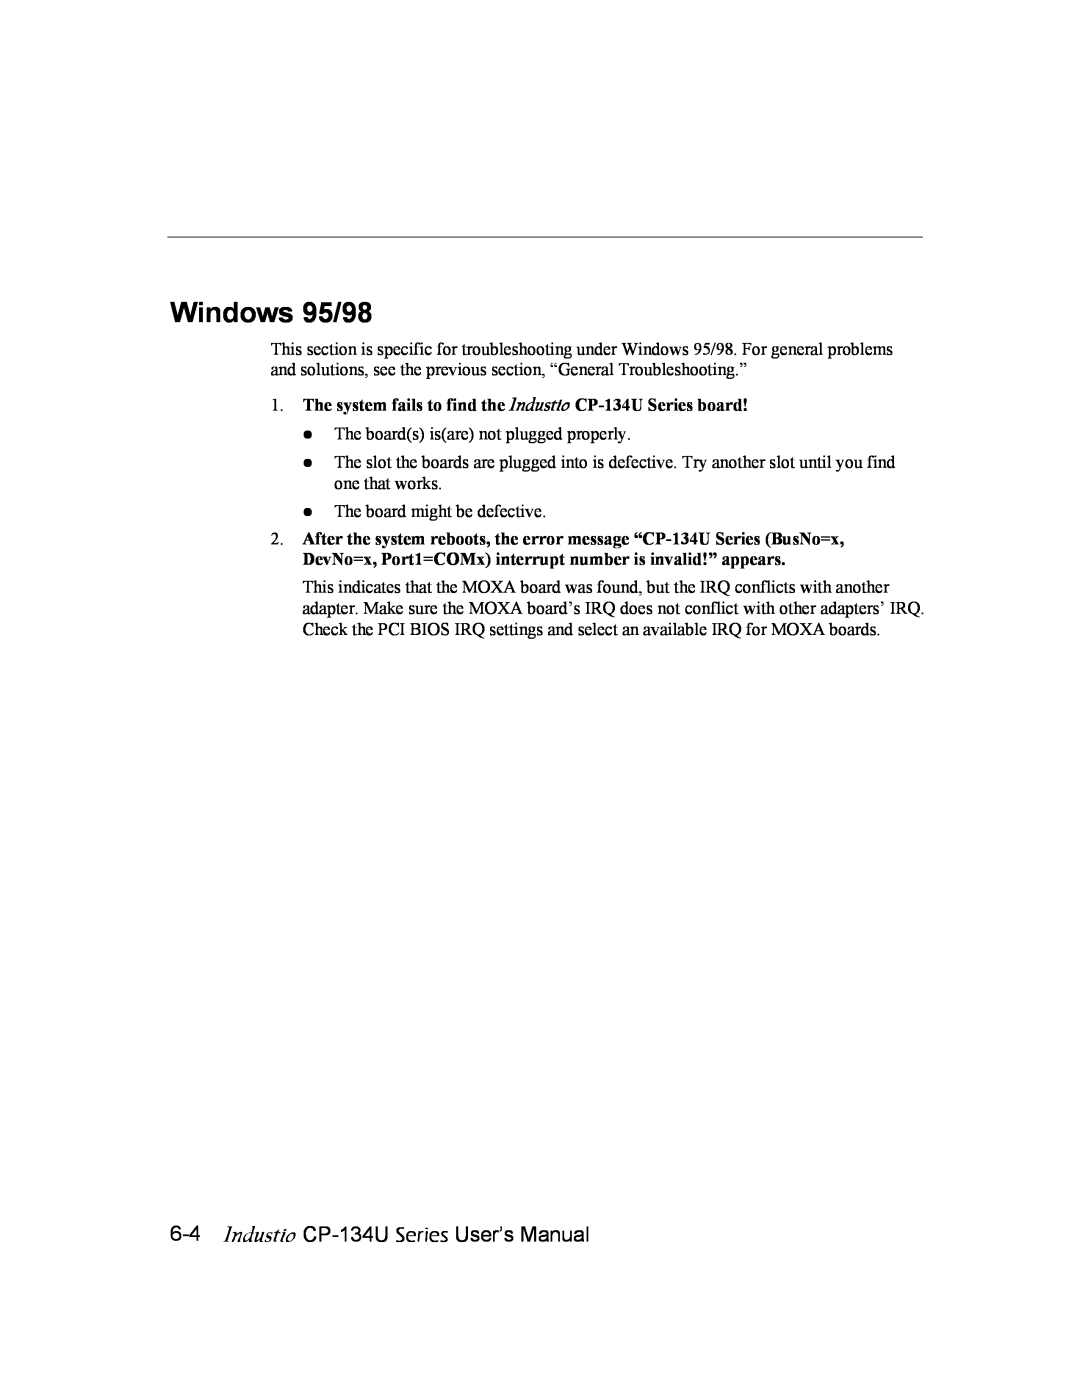 Moxa Technologies user manual Industio CP-134U Series User’s Manual, Windows 95/98 